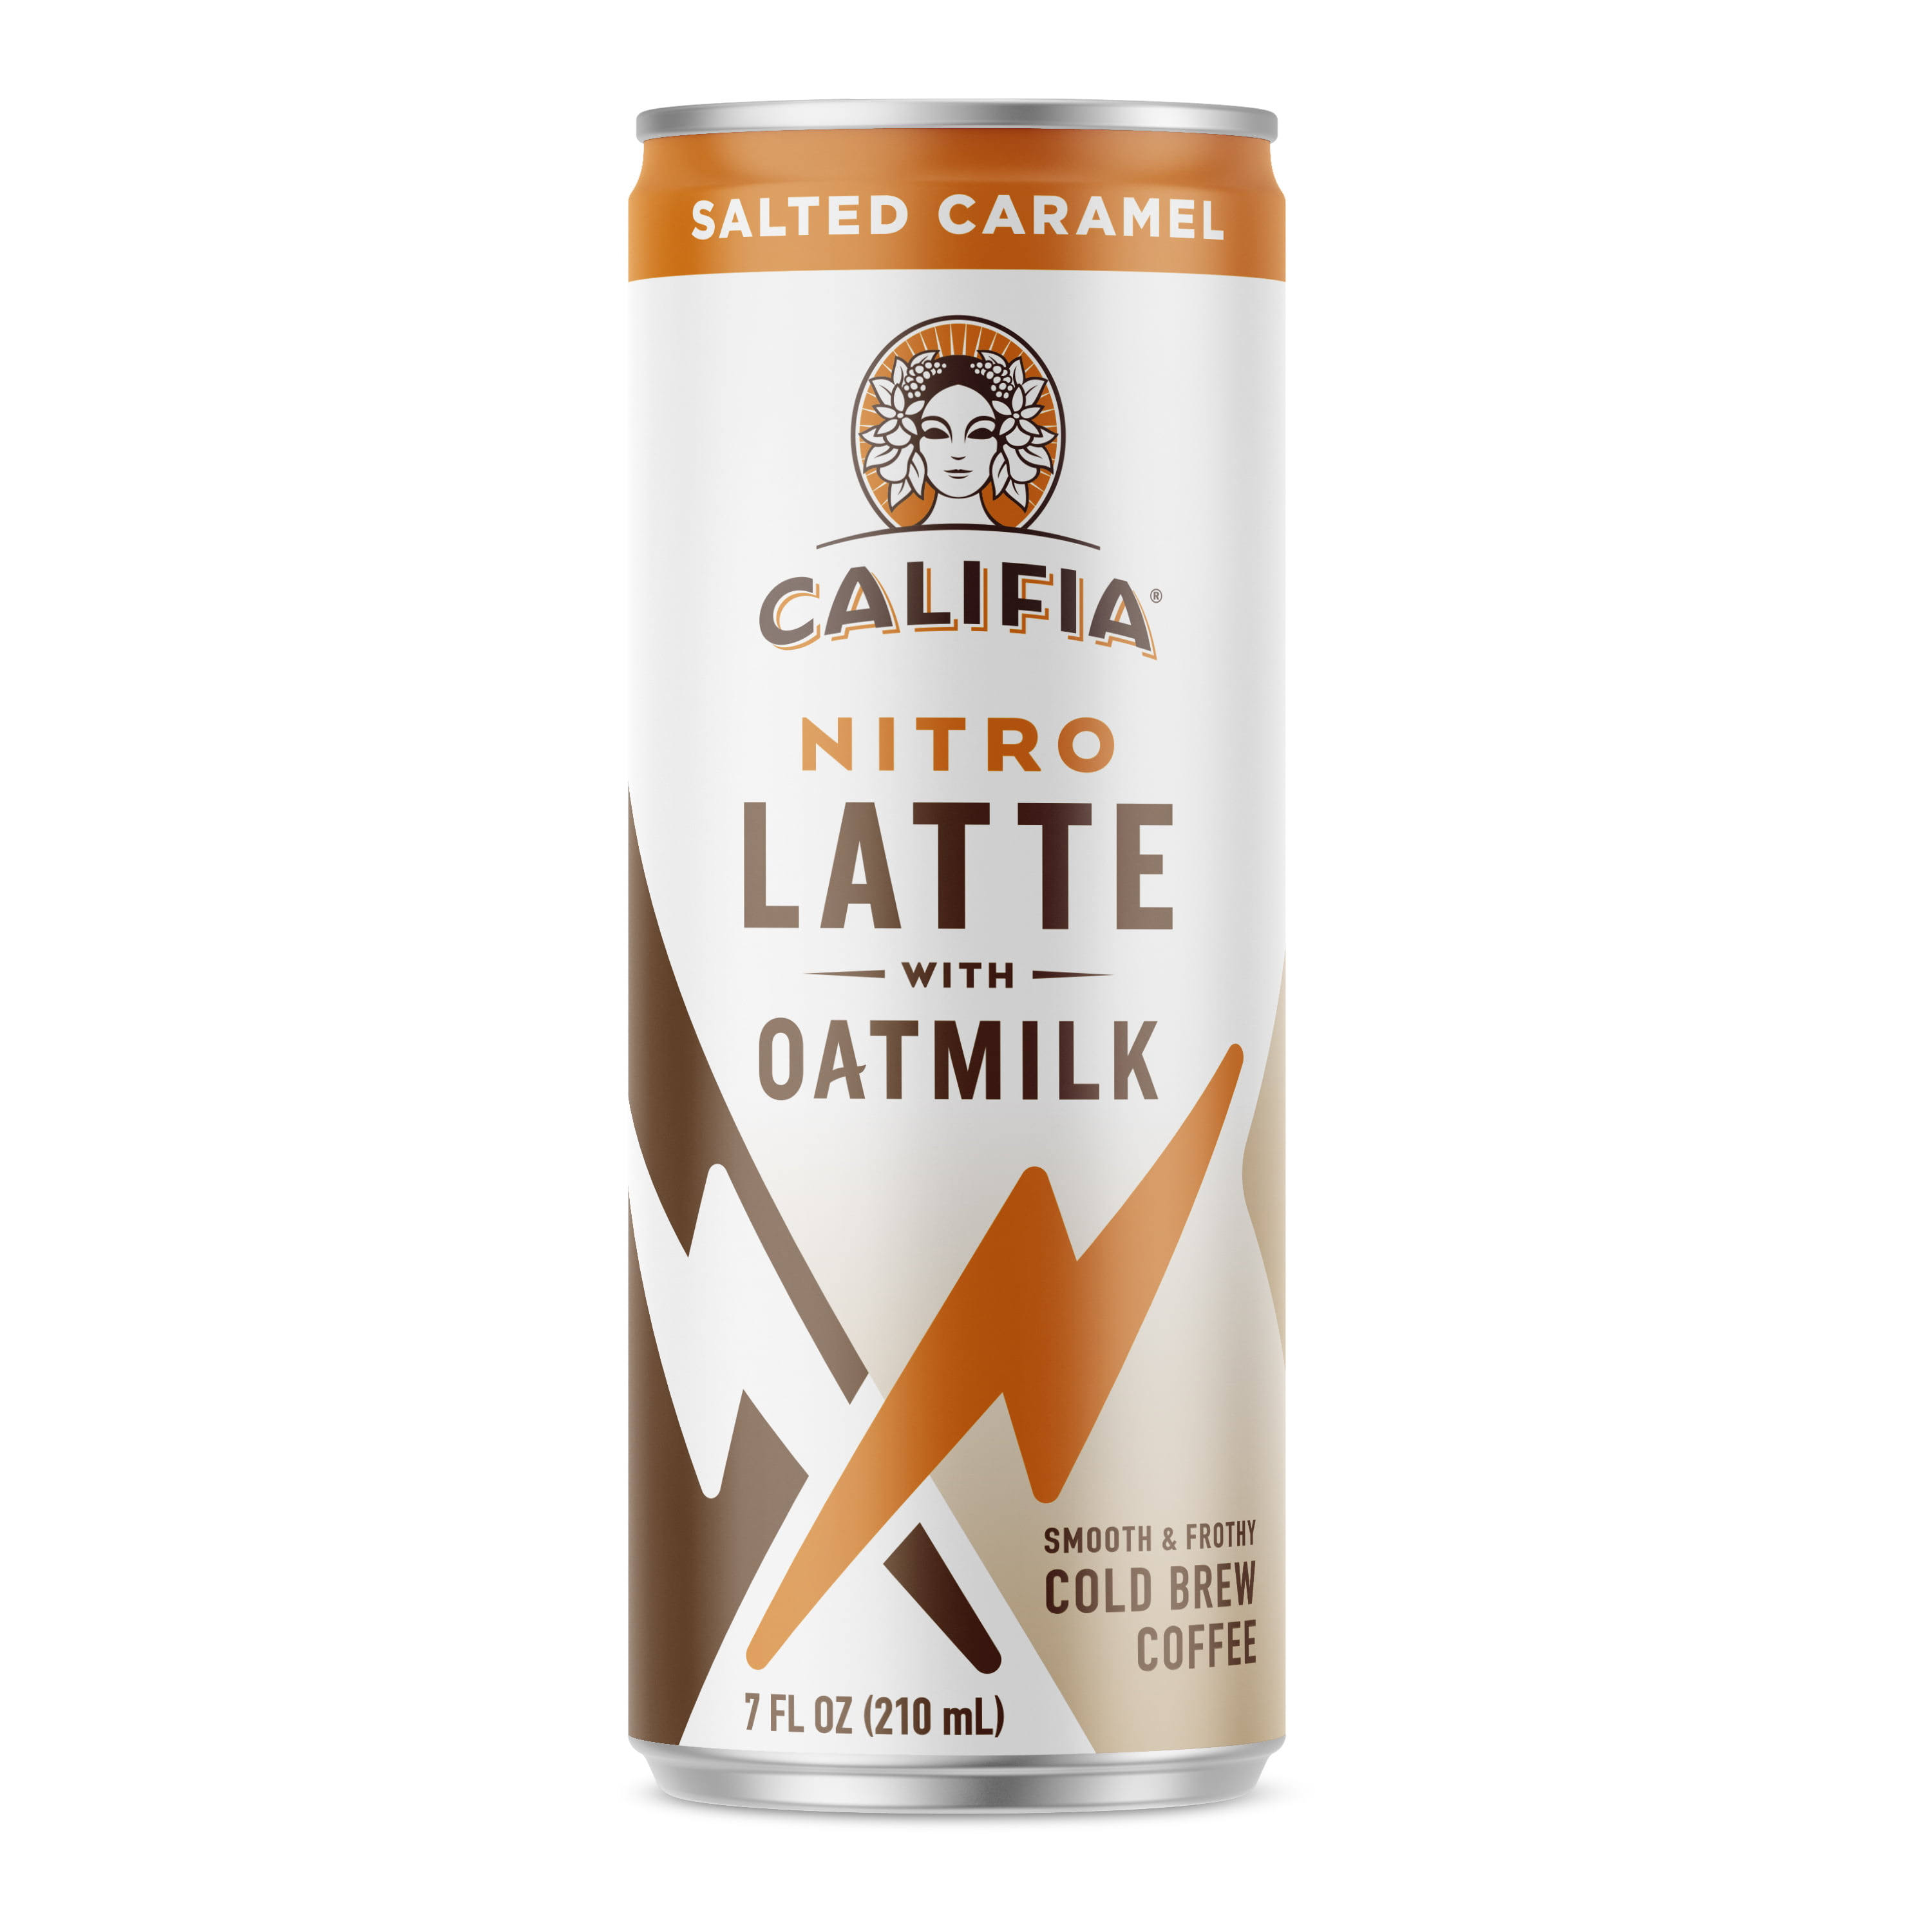 Califia Nitro Latte with Oatmilk, Salted Caramel - 7 fl oz